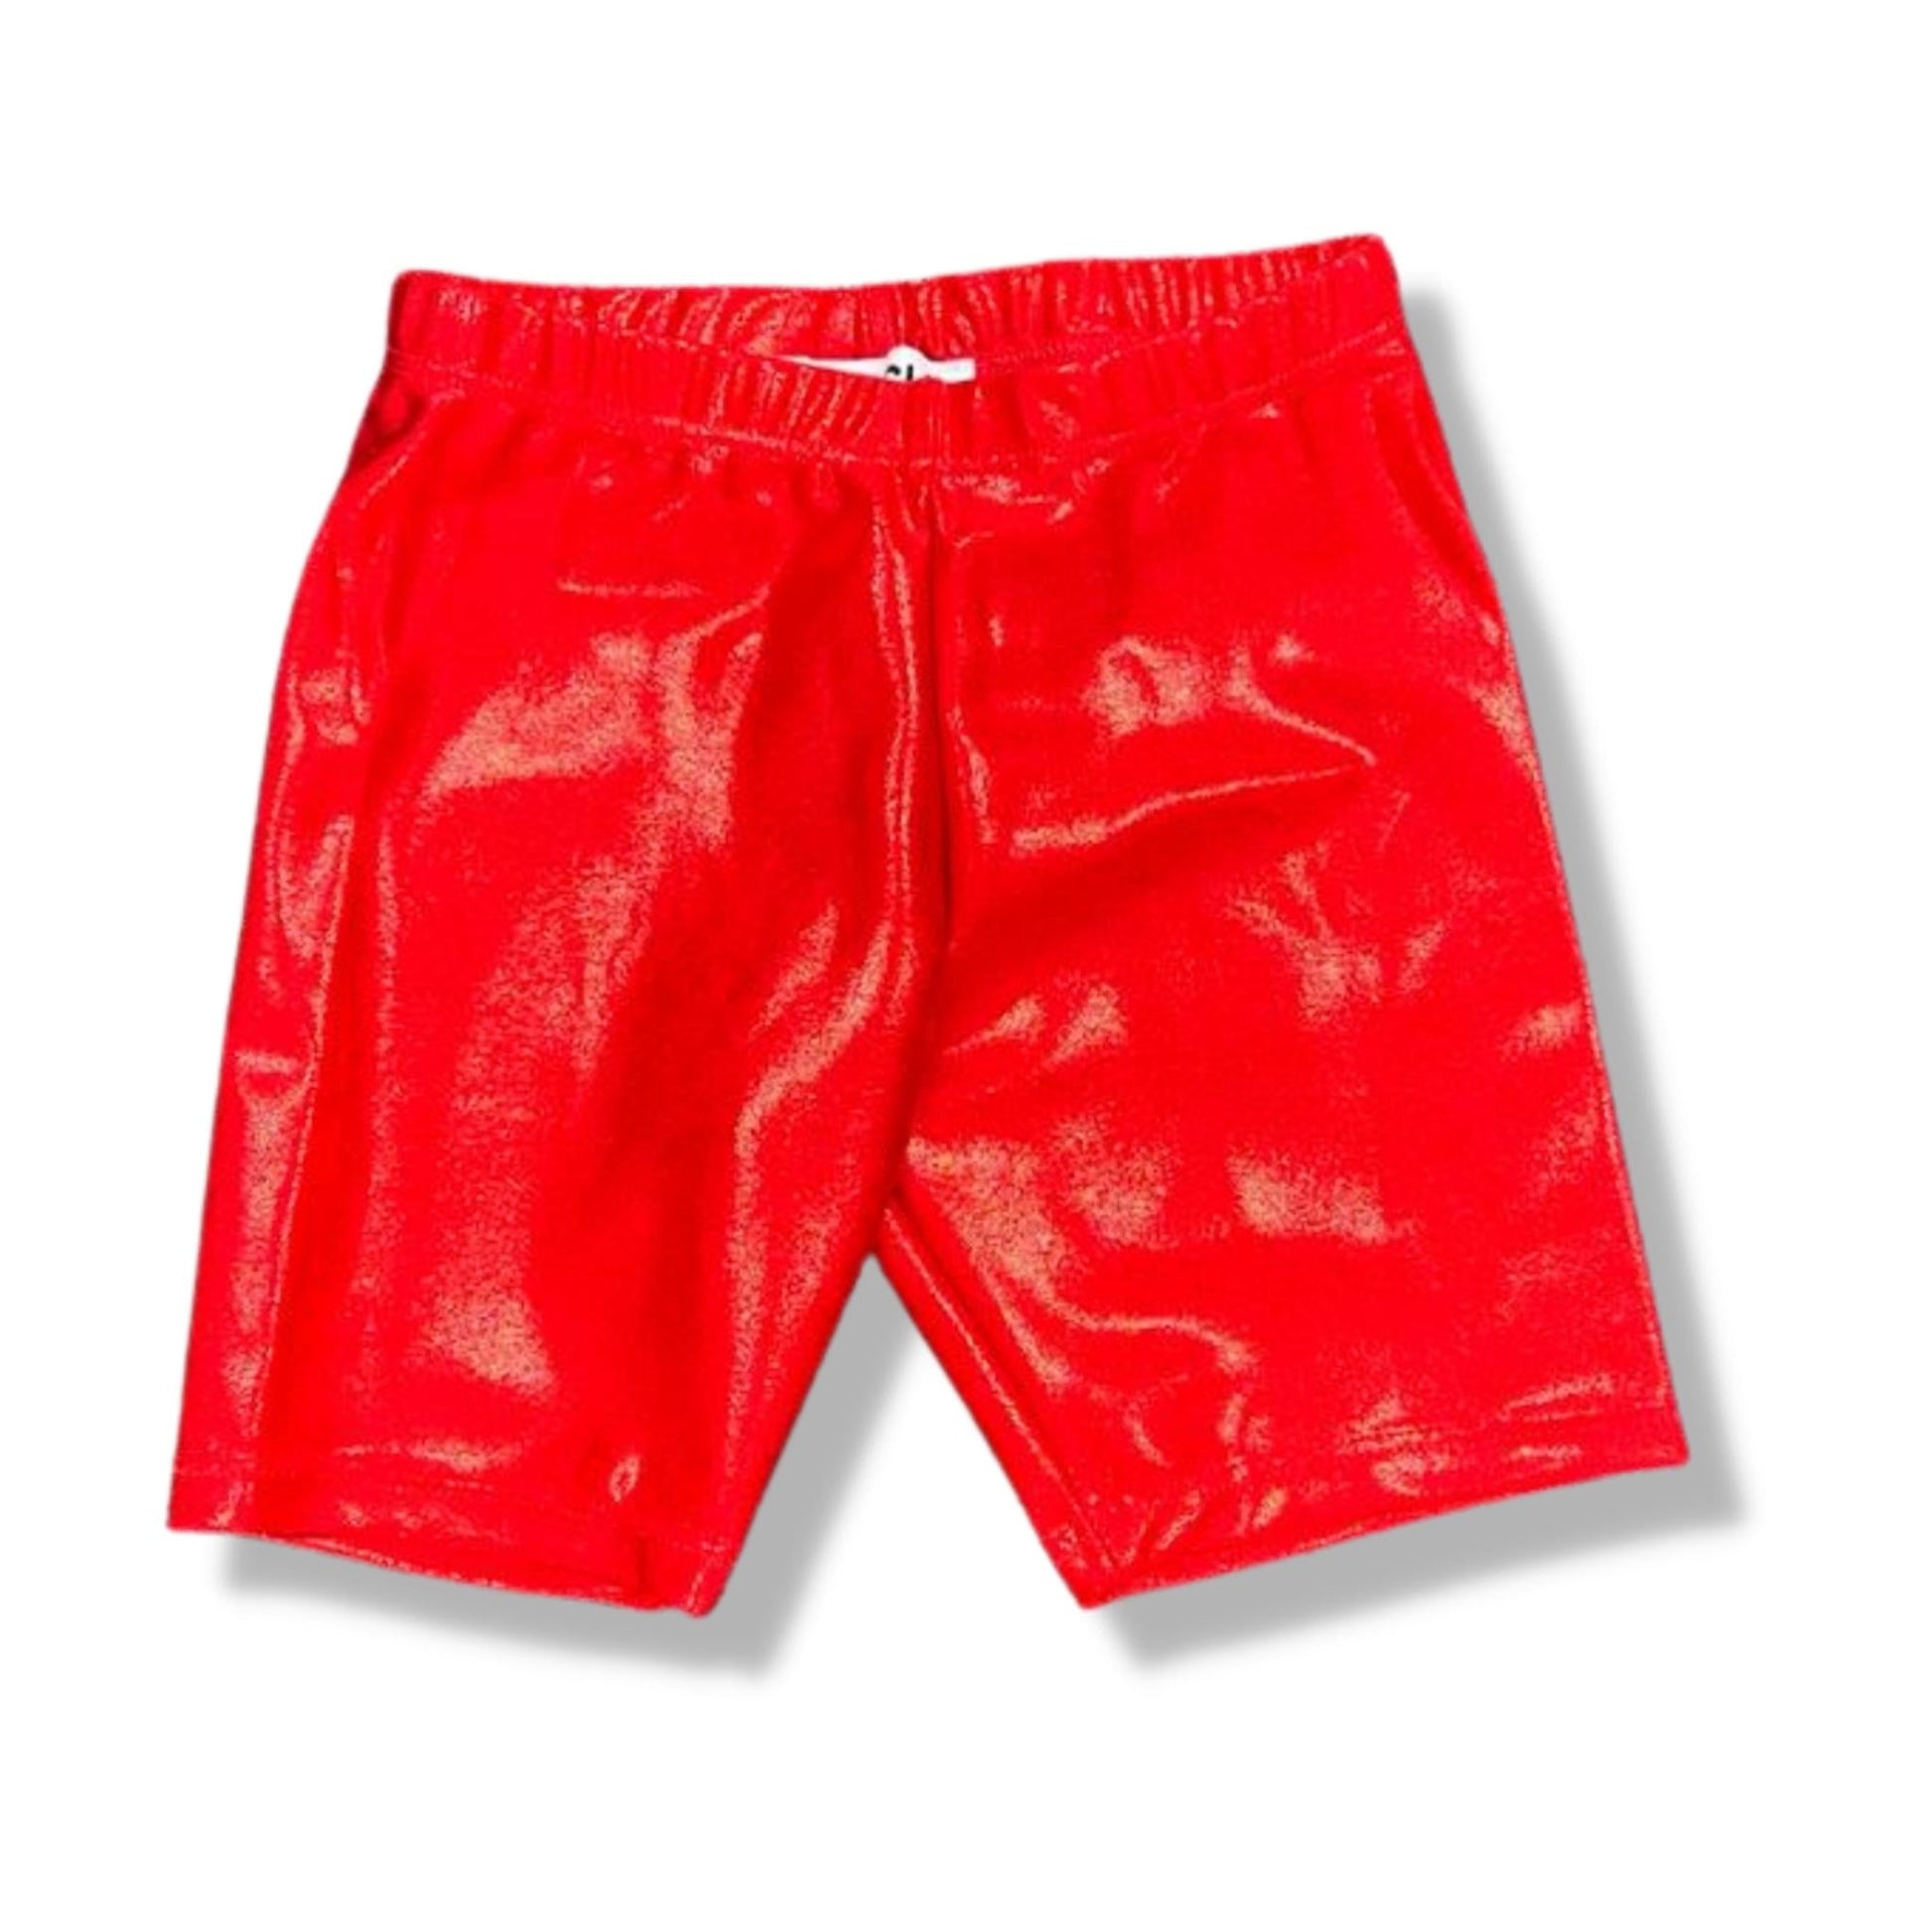 Rock Candy Red Glitter Bike Short - a Spirit Animal - shorts $30-$60 4 5